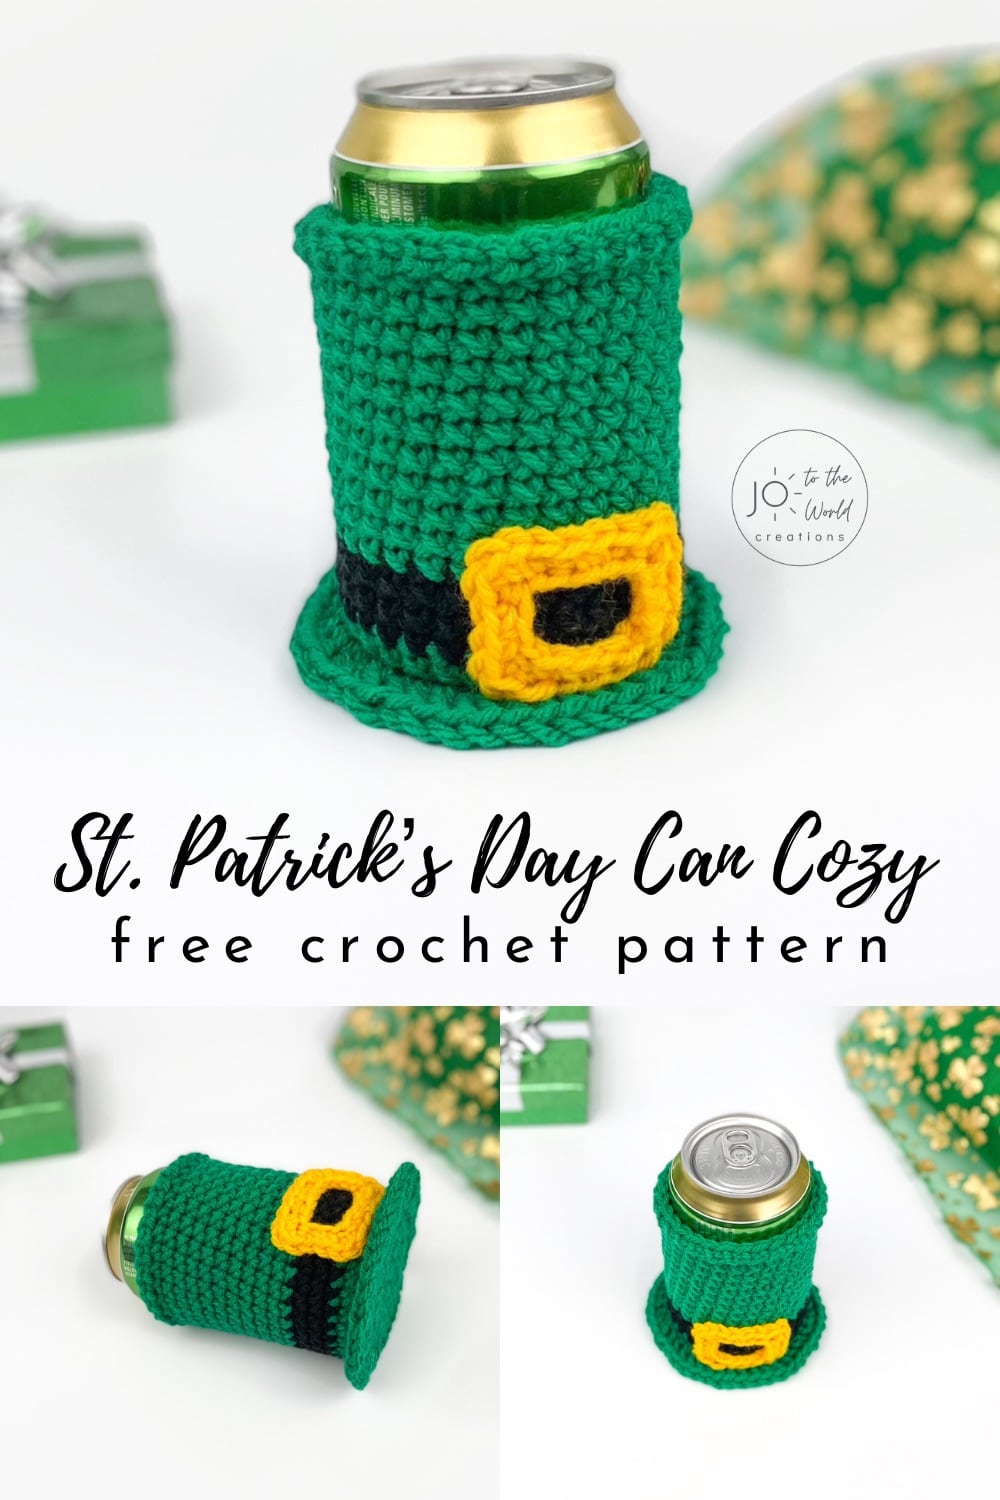 St. Patrick's Day Crochet Can Cozy Pattern